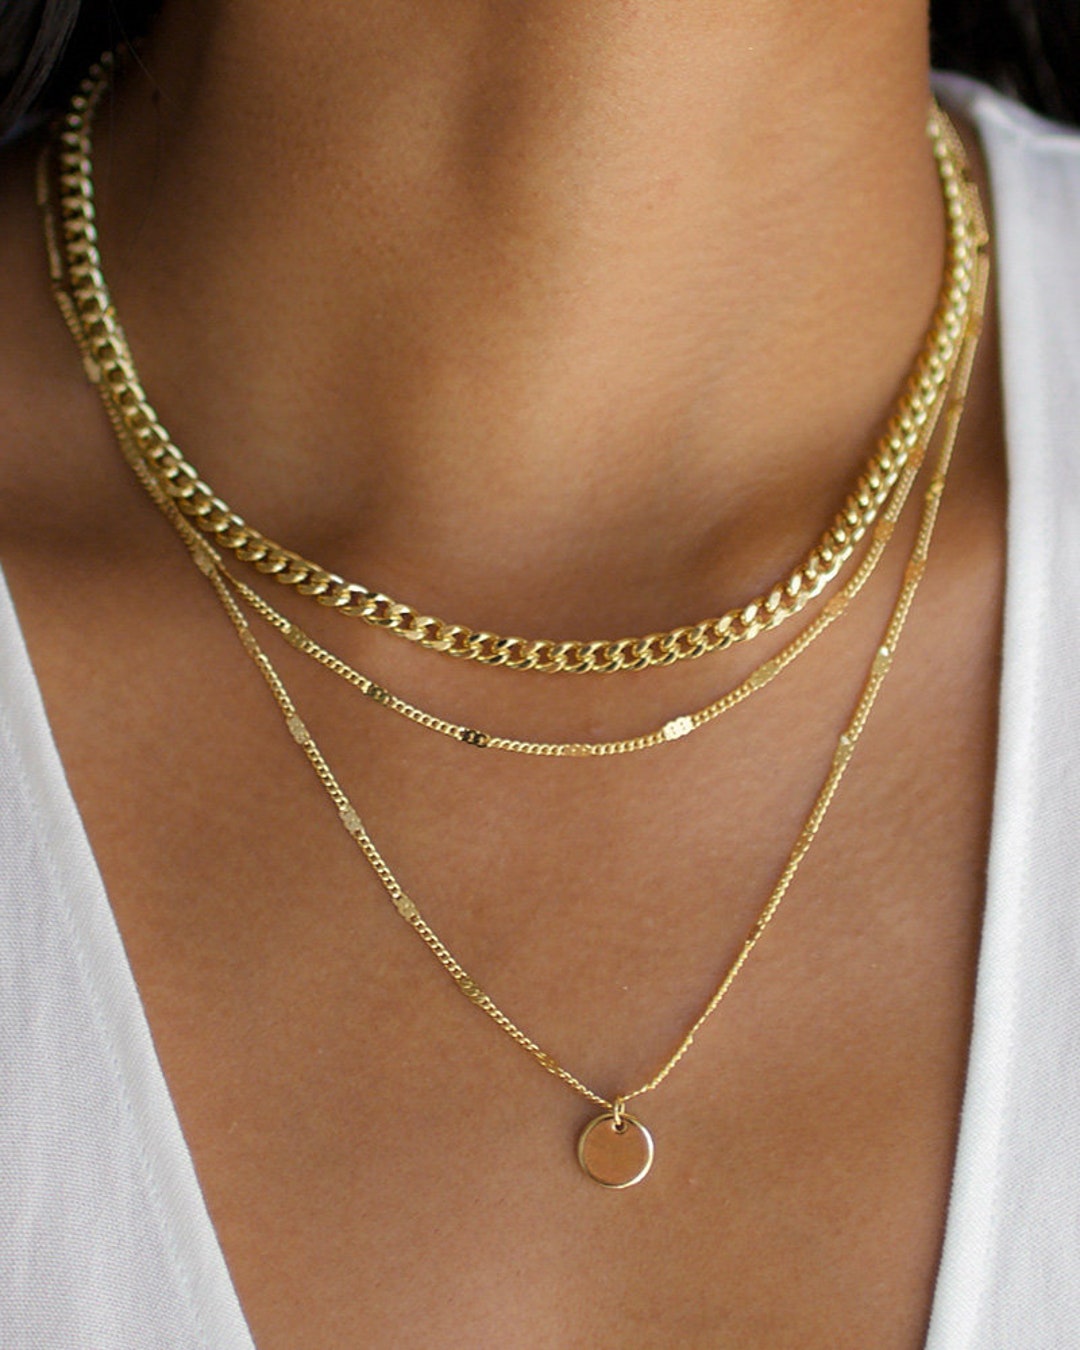 Three-Way Tie Gold Necklace Set